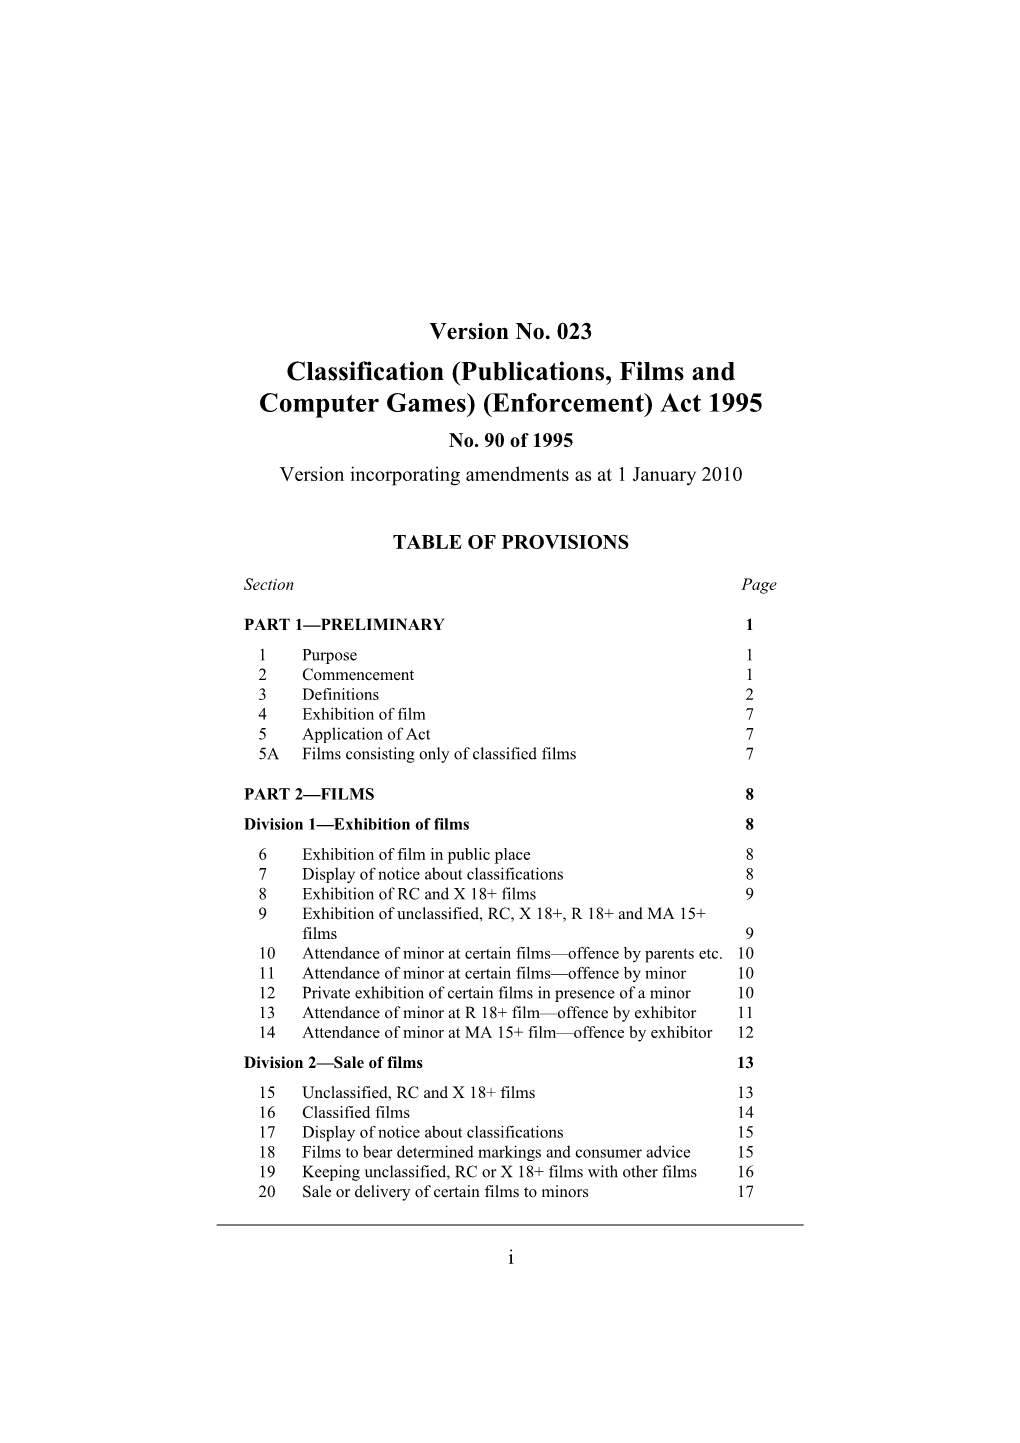 Classification (Publications, Films and Computer Games) (Enforcement) Act 1995